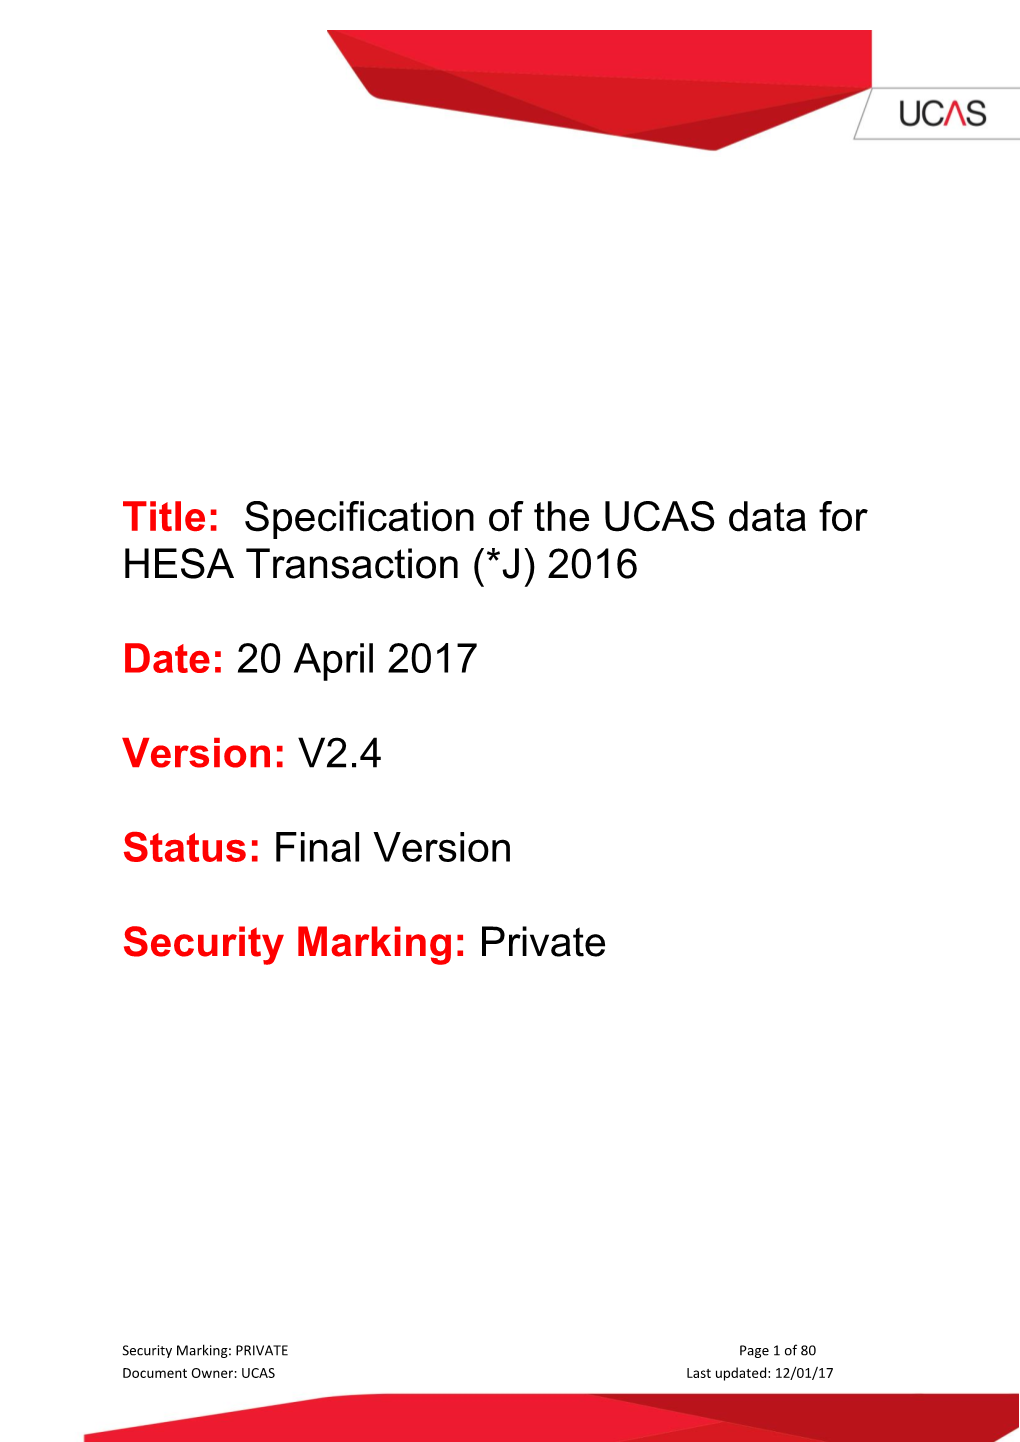 Specification of the UCAS Data for HESA Transaction (*J) 2016